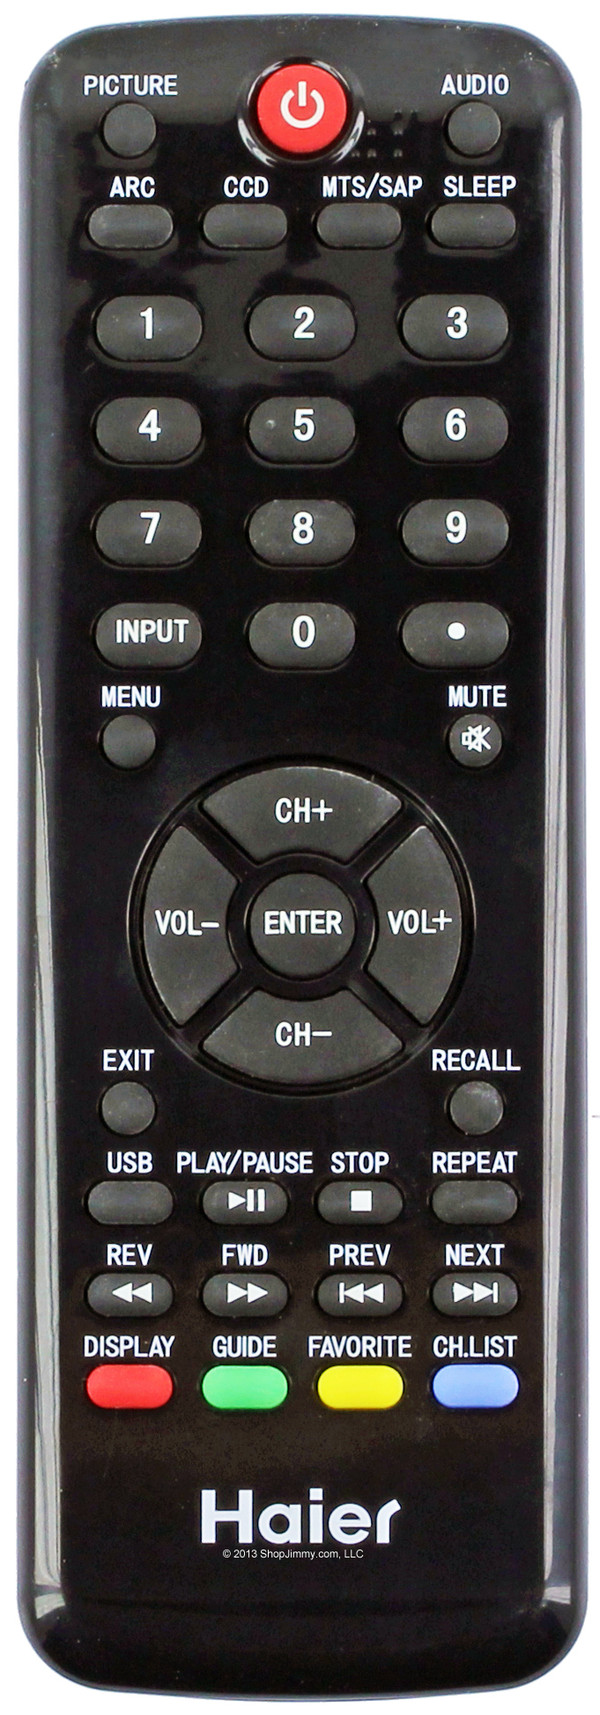 Haier TV-5620-107 Remote Control